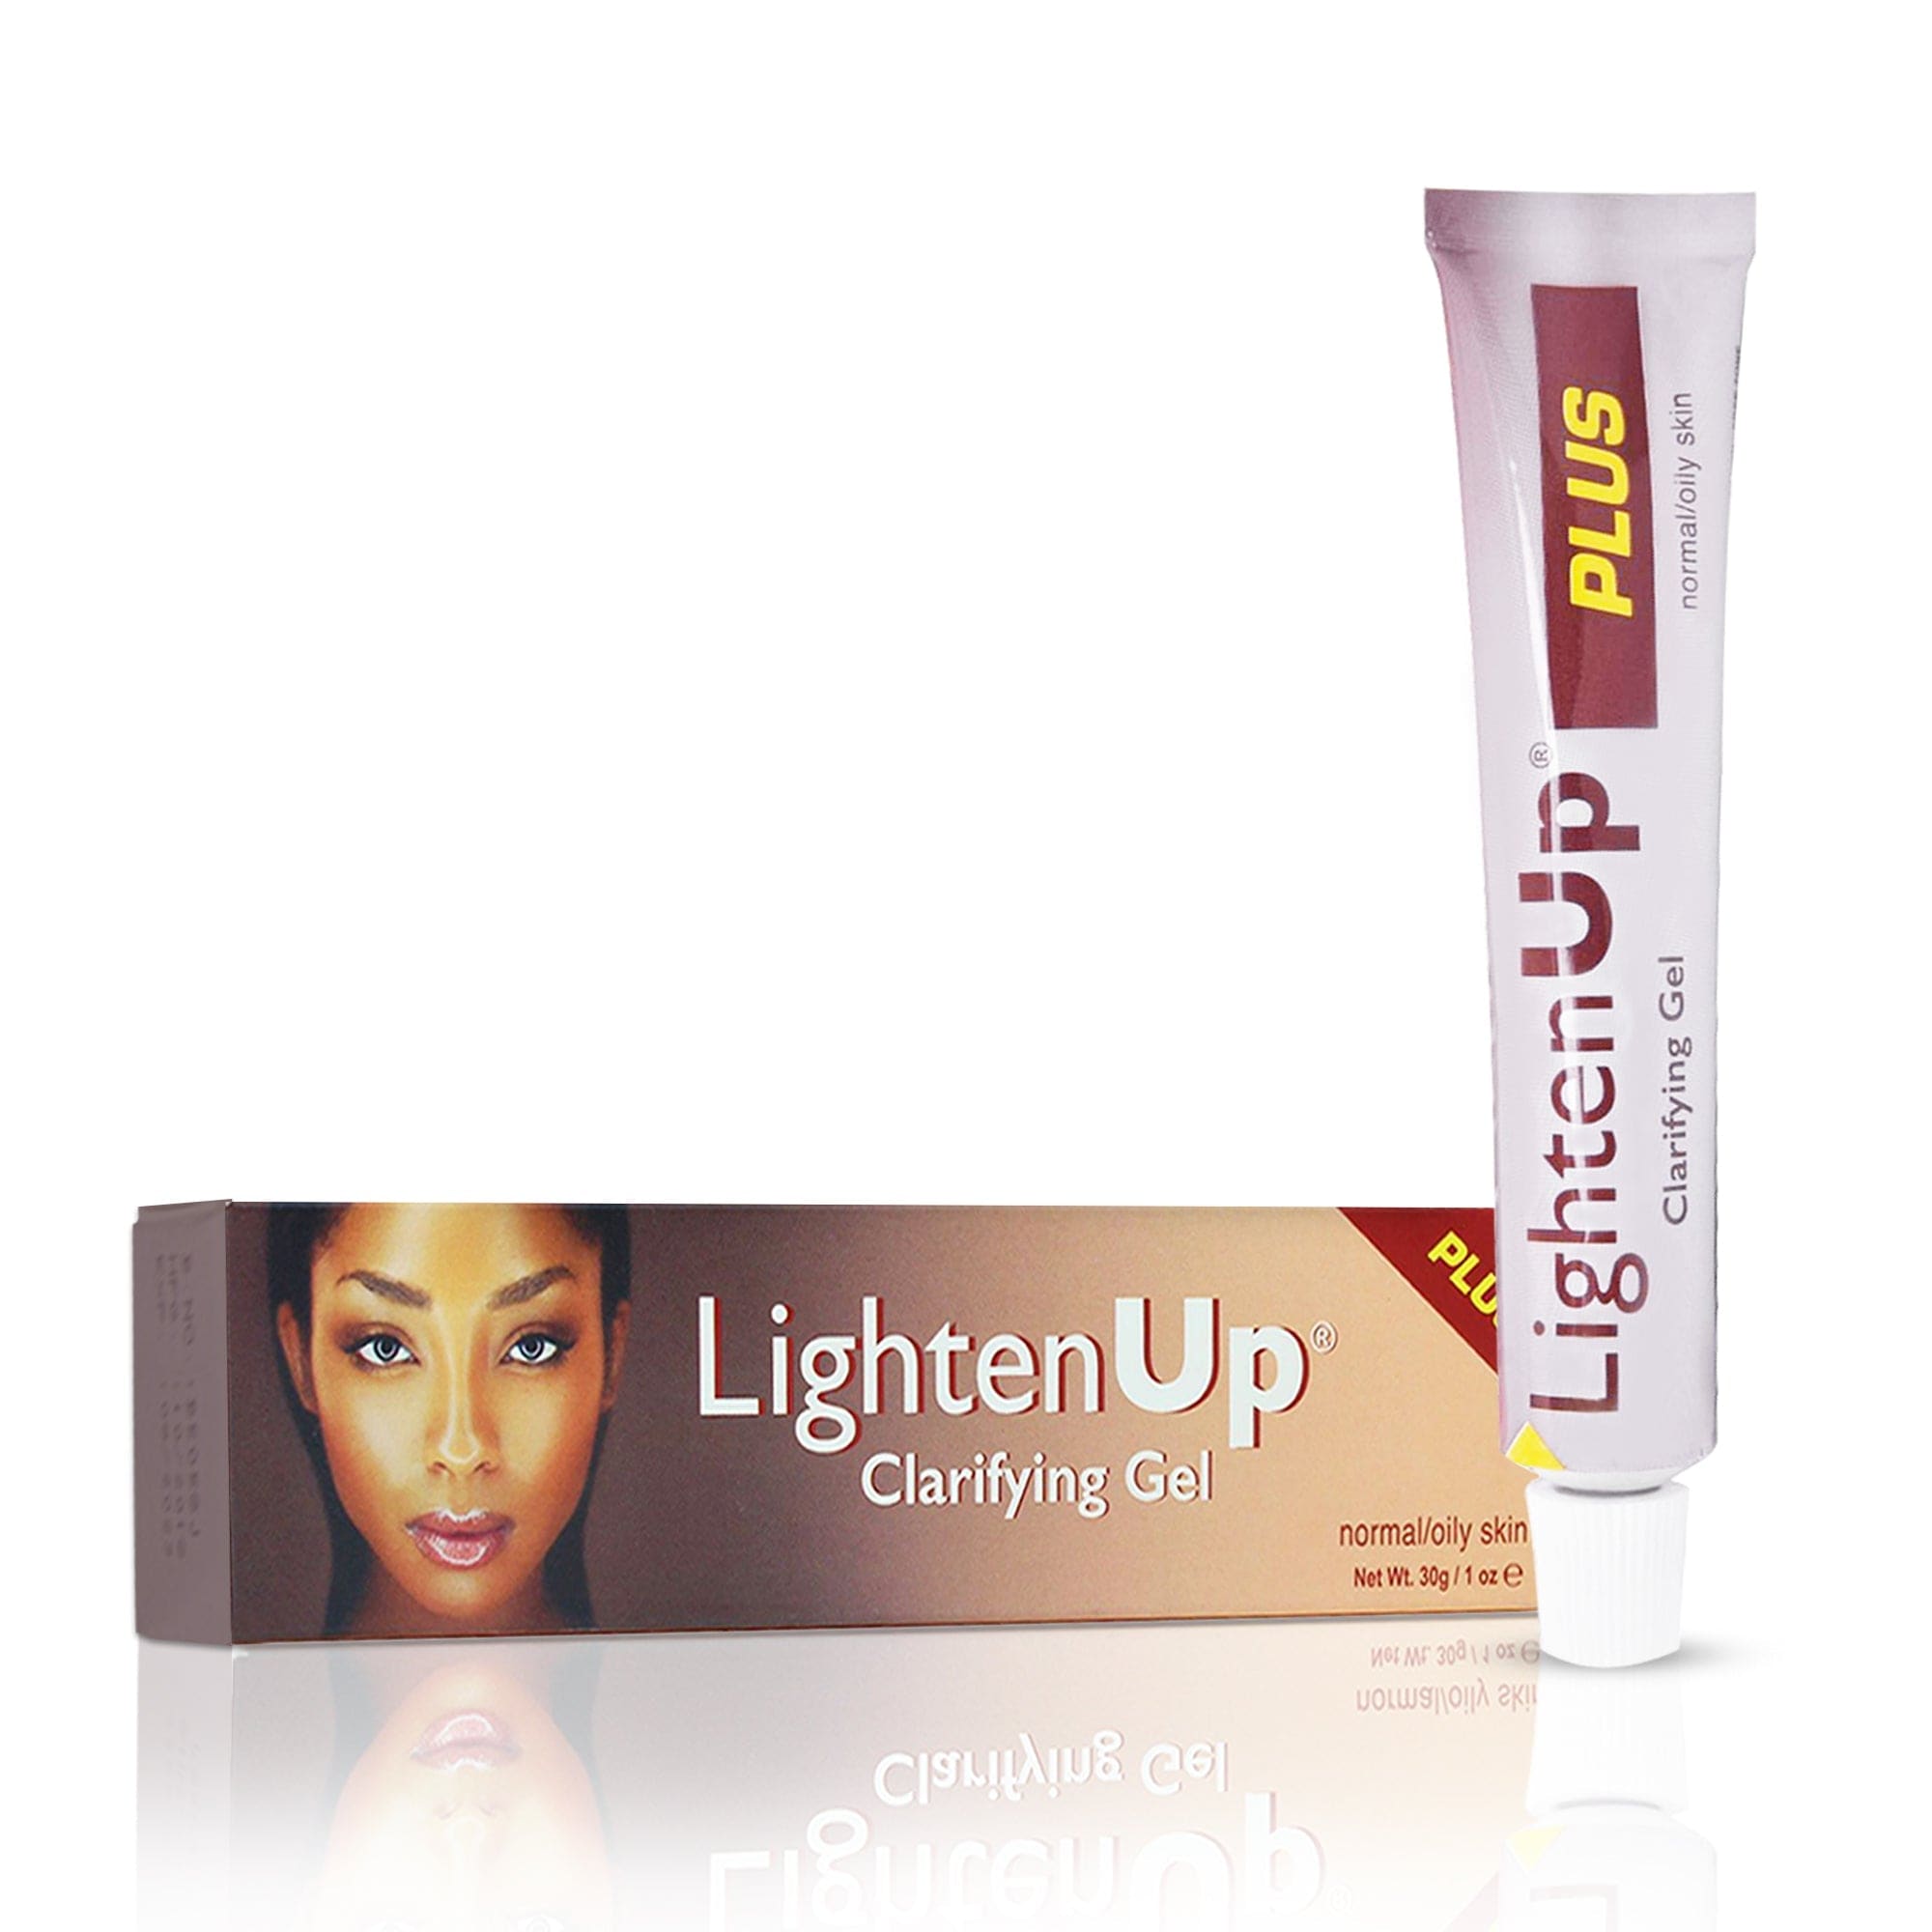 Omic LightenUp PLUS Gel chiarificatore in tubo - 30g / 1 Oz LightenUp - Mitchell Brands - Schiaritura della pelle, schiaritura della pelle, attenuazione delle macchie scure, burro di karité, prodotti per la crescita dei capelli